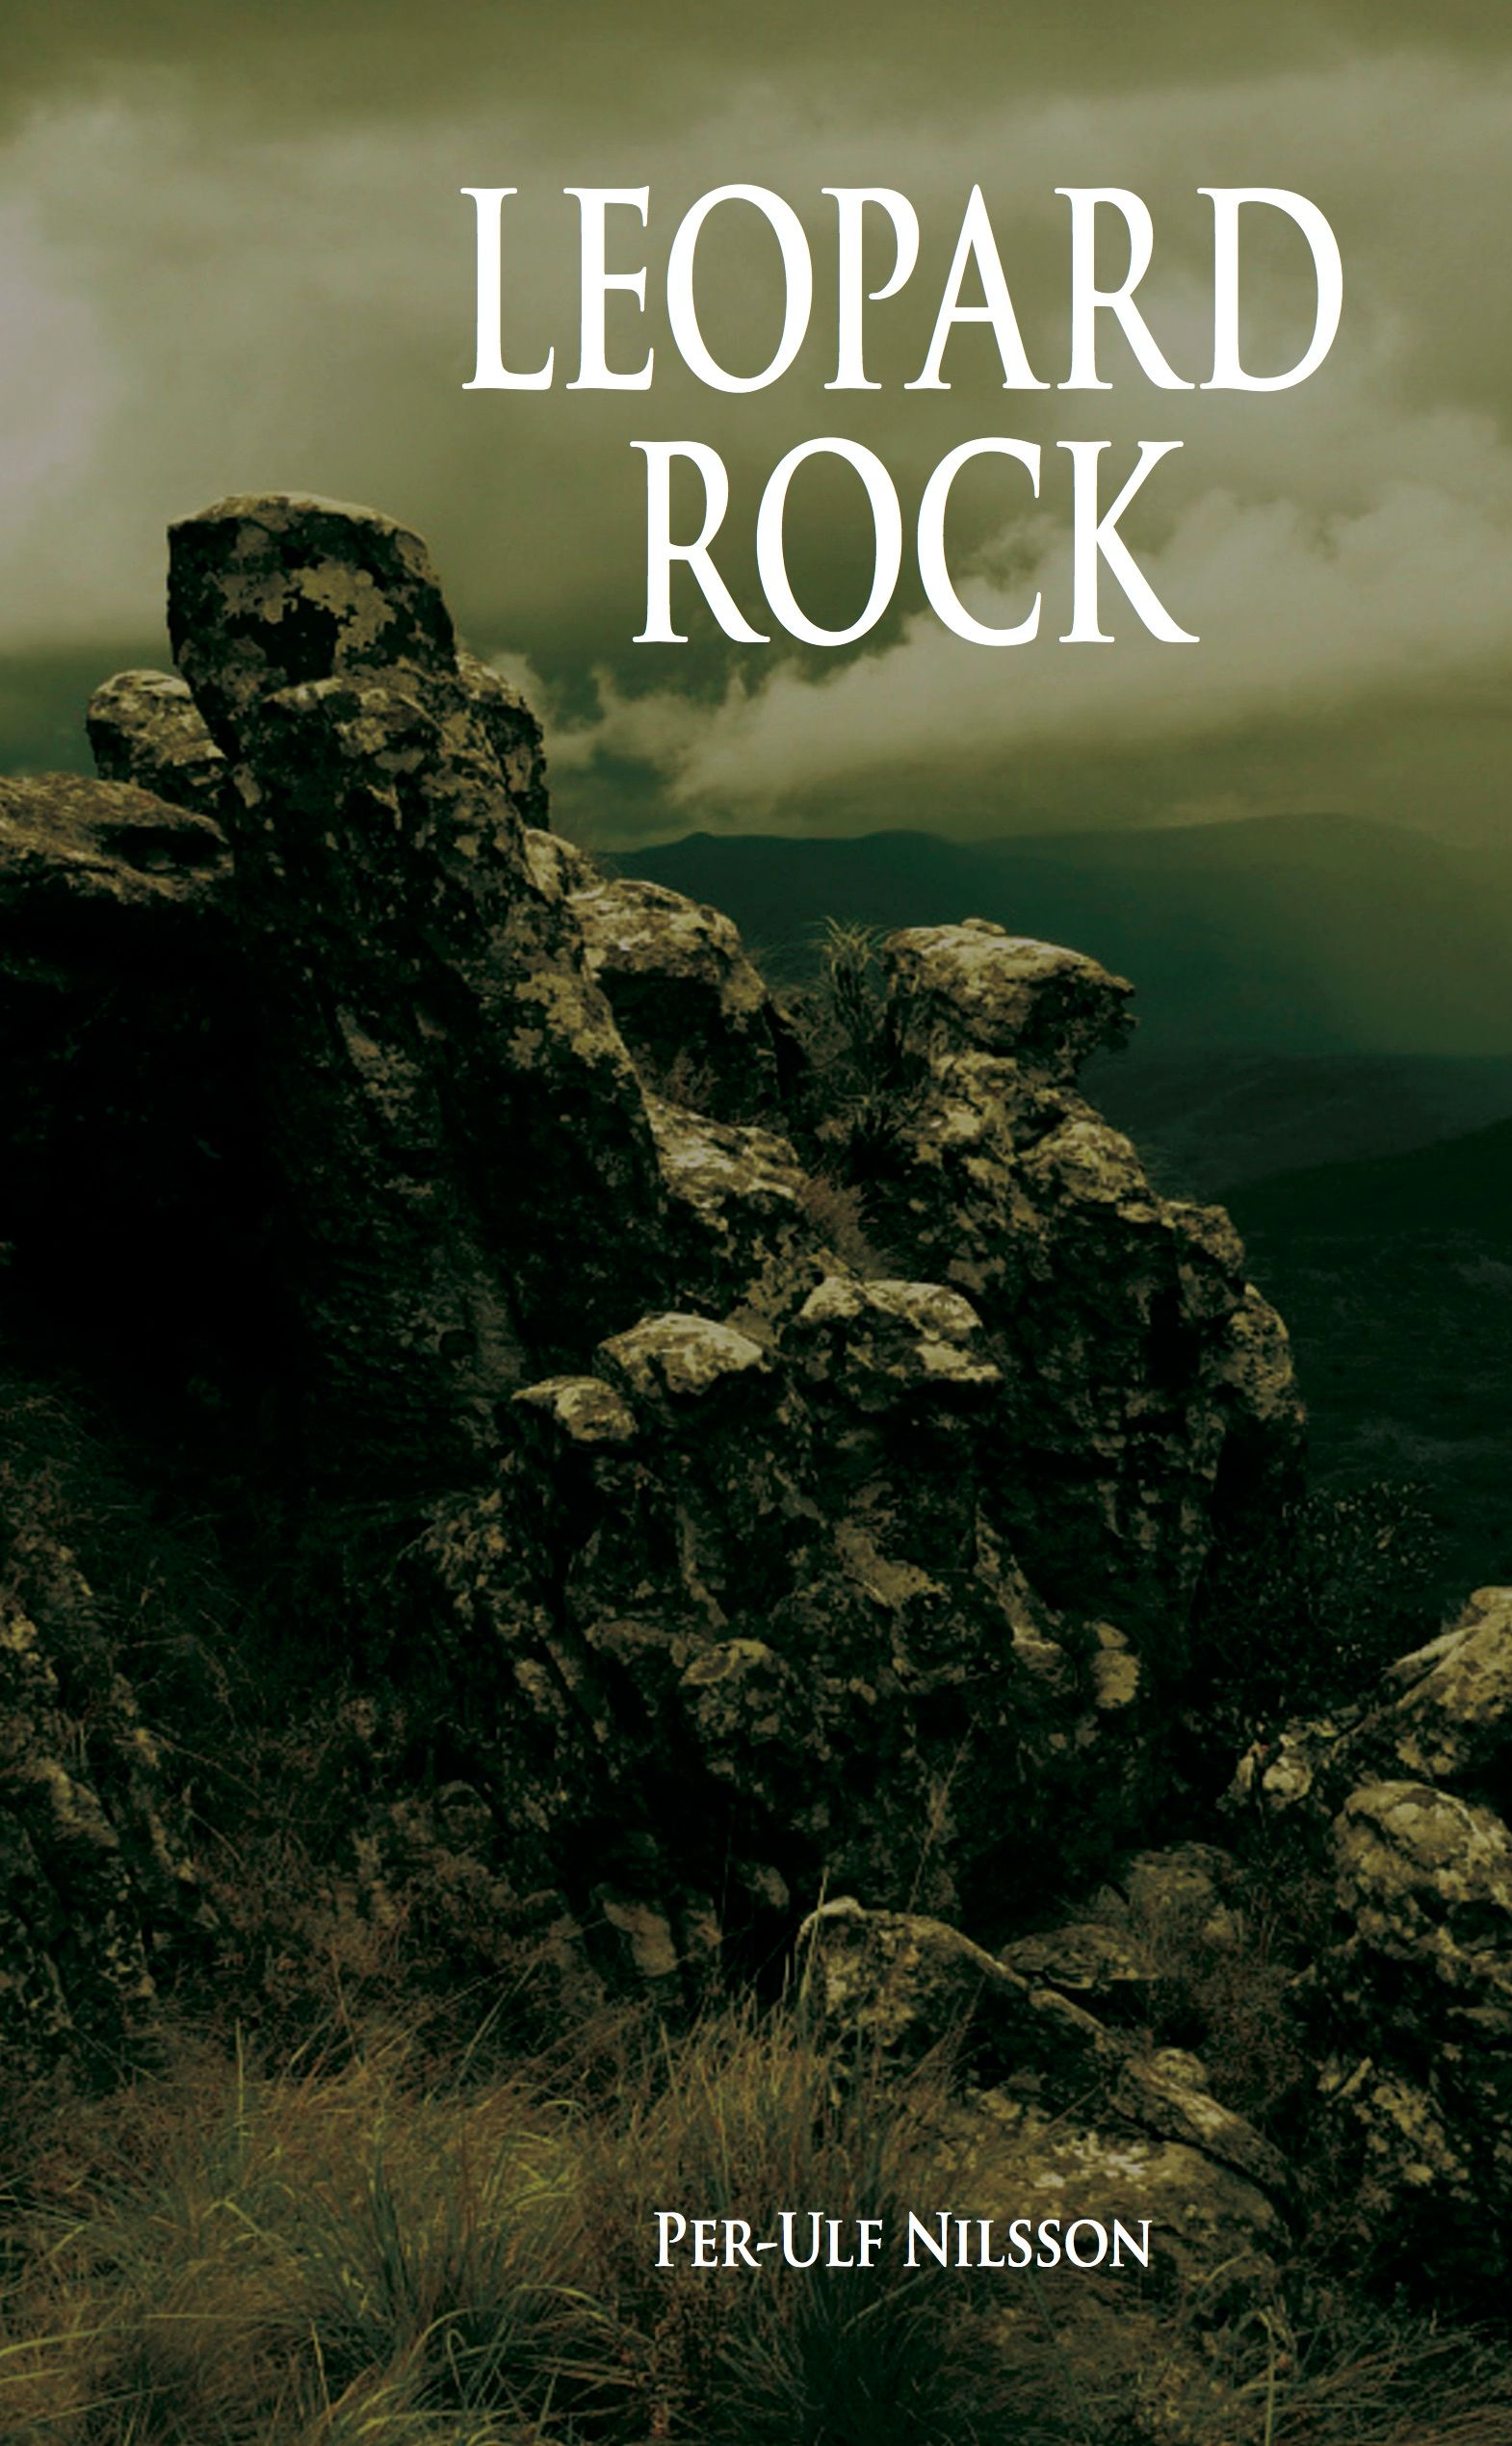 Leopard Rock, eBook by Per-Ulf Nilsson